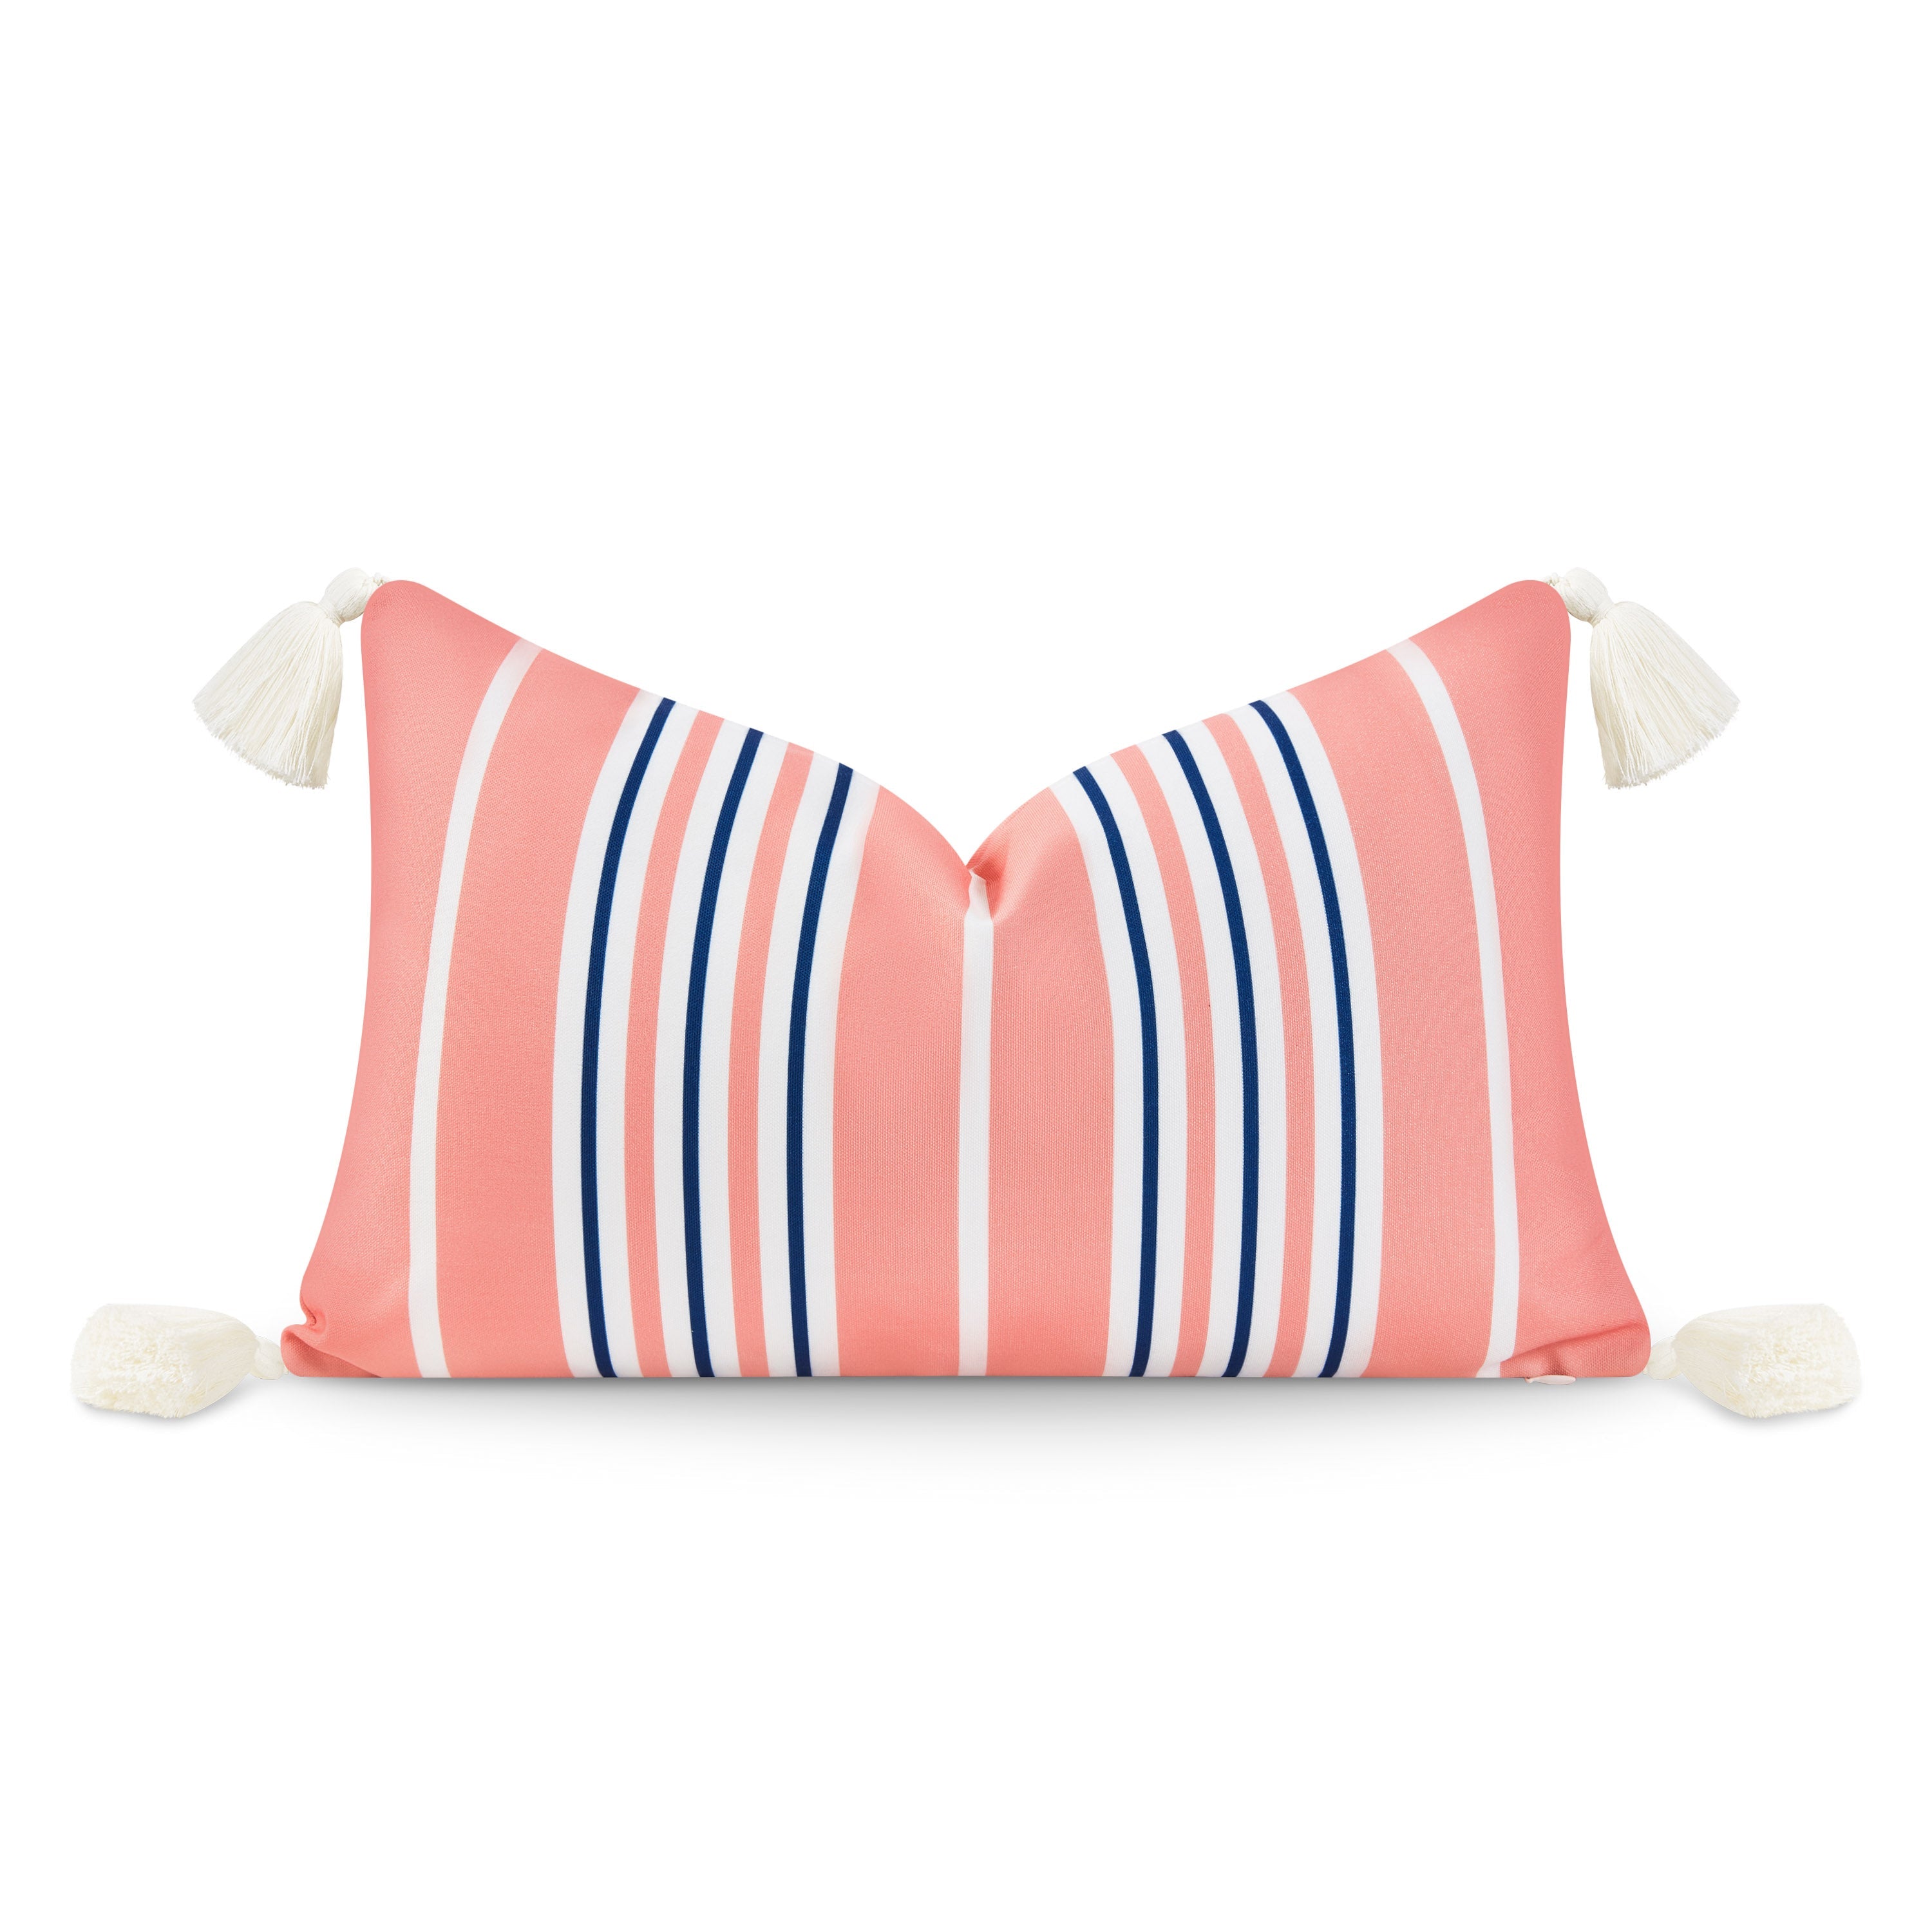 Coastal Indoor Outdoor Lumbar Pillow Cover, Stripe Tassel, Coral Pink Navy Blue, 12"x20"